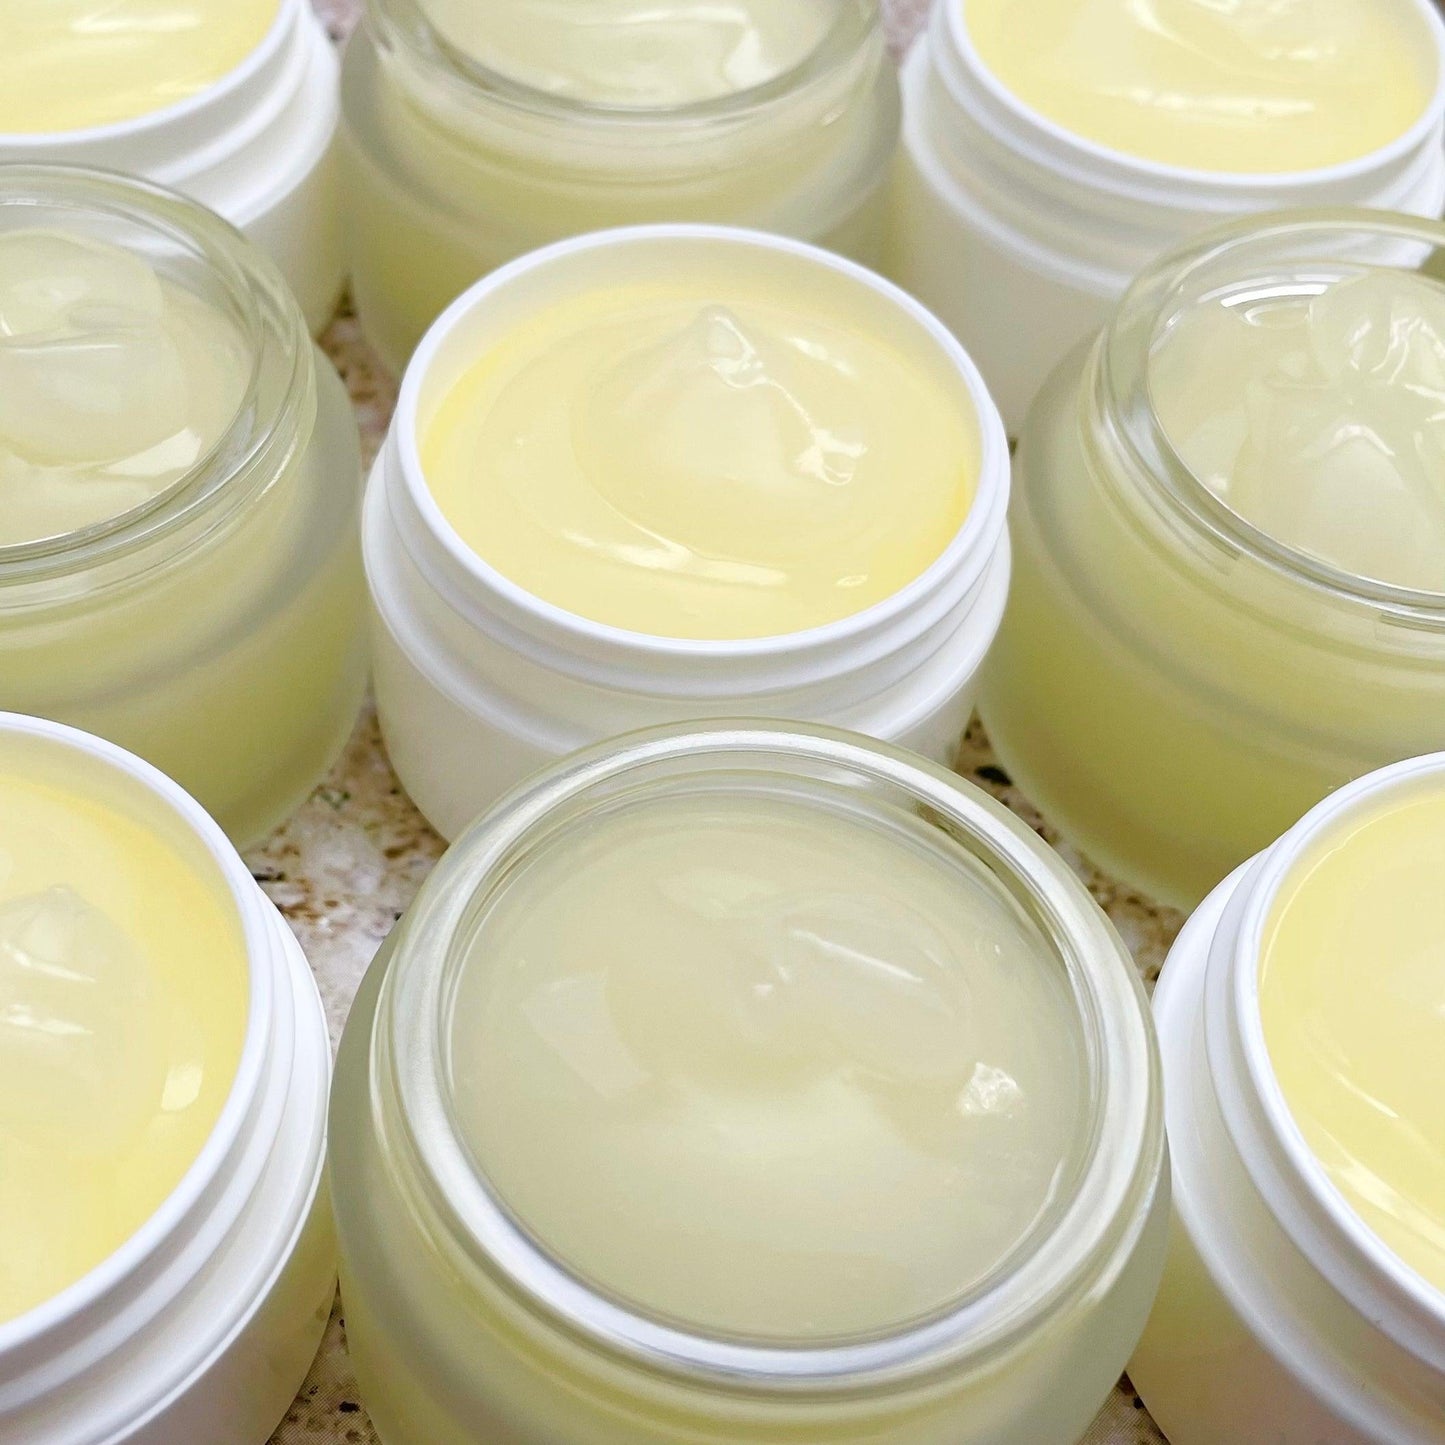 DR.HC Sulfur Onsen Clarifying Gel Cream (25~40g, 0.9~1.4oz) (Acne-acne, Anti-blemish, Oil-balancing, Gently Exfoliating...)